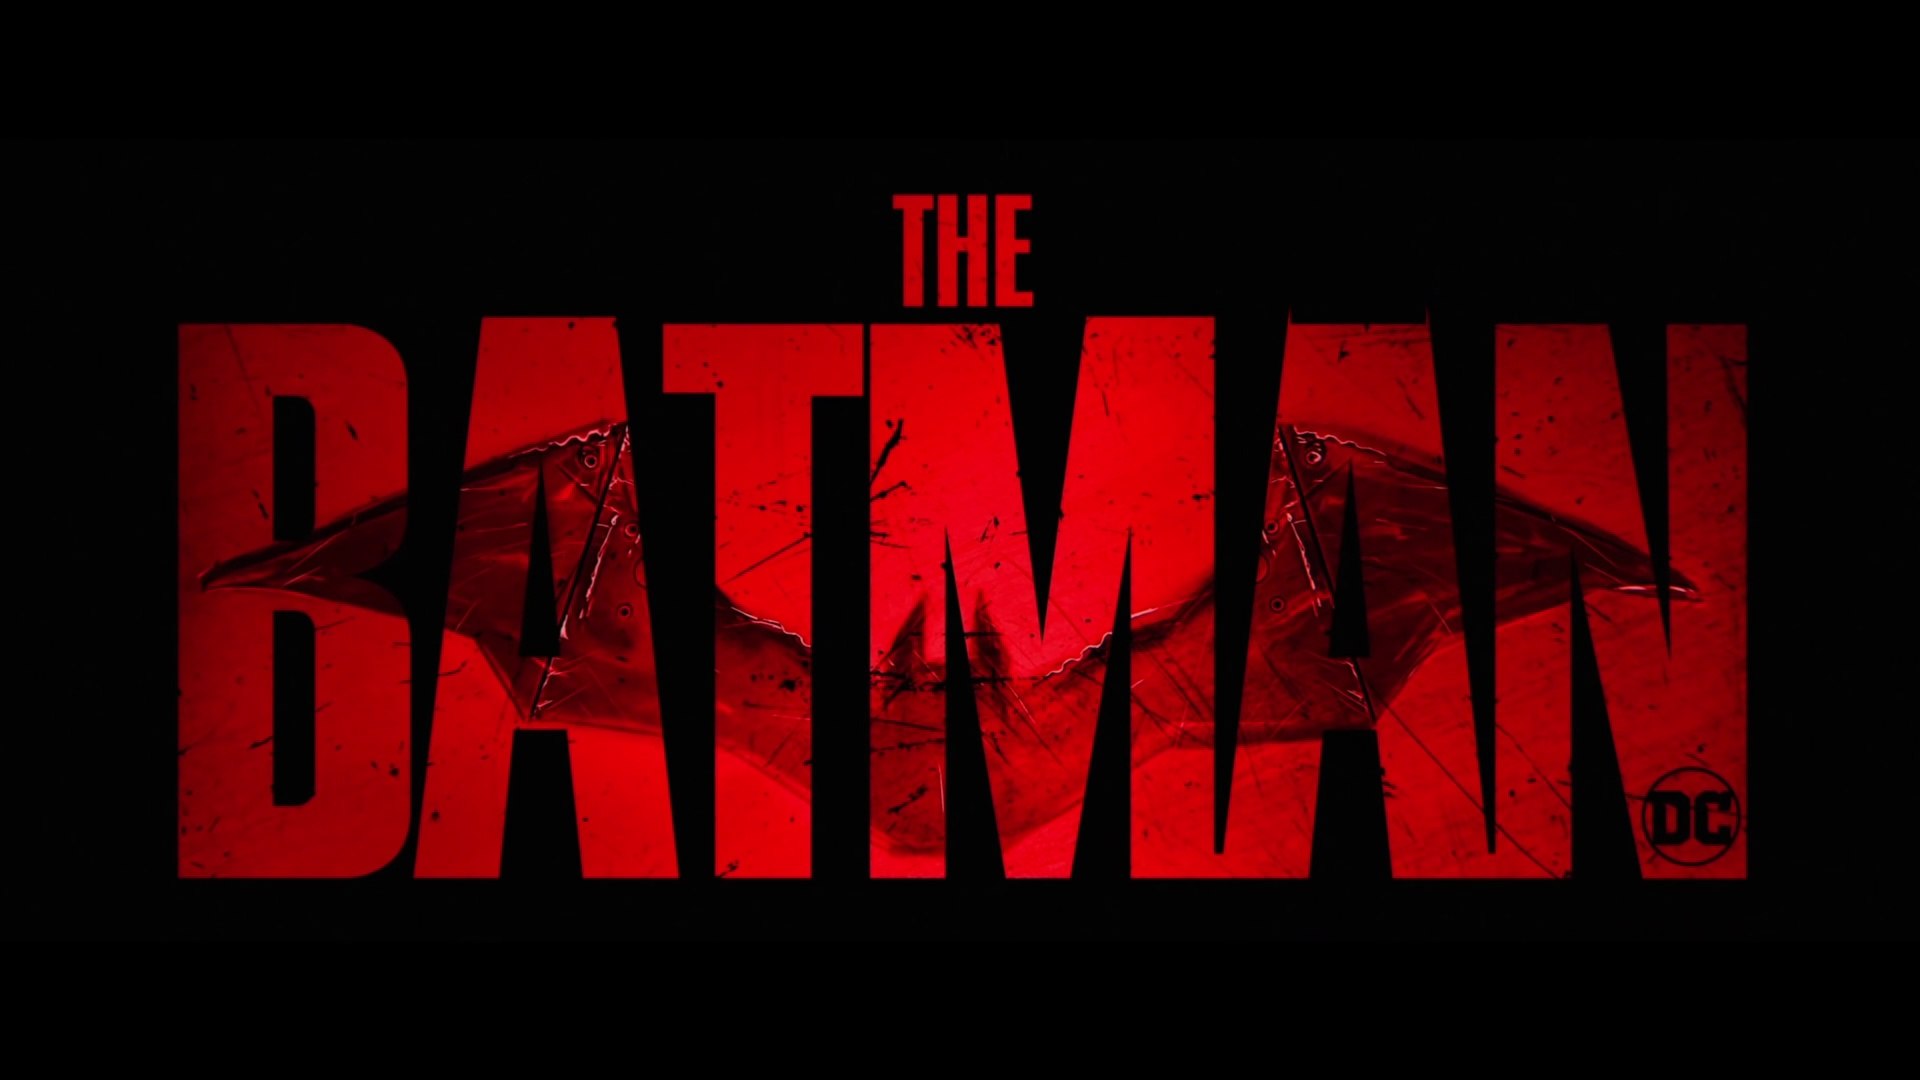 THE BATMAN ✰ 4K ULTRA HD TRAILER